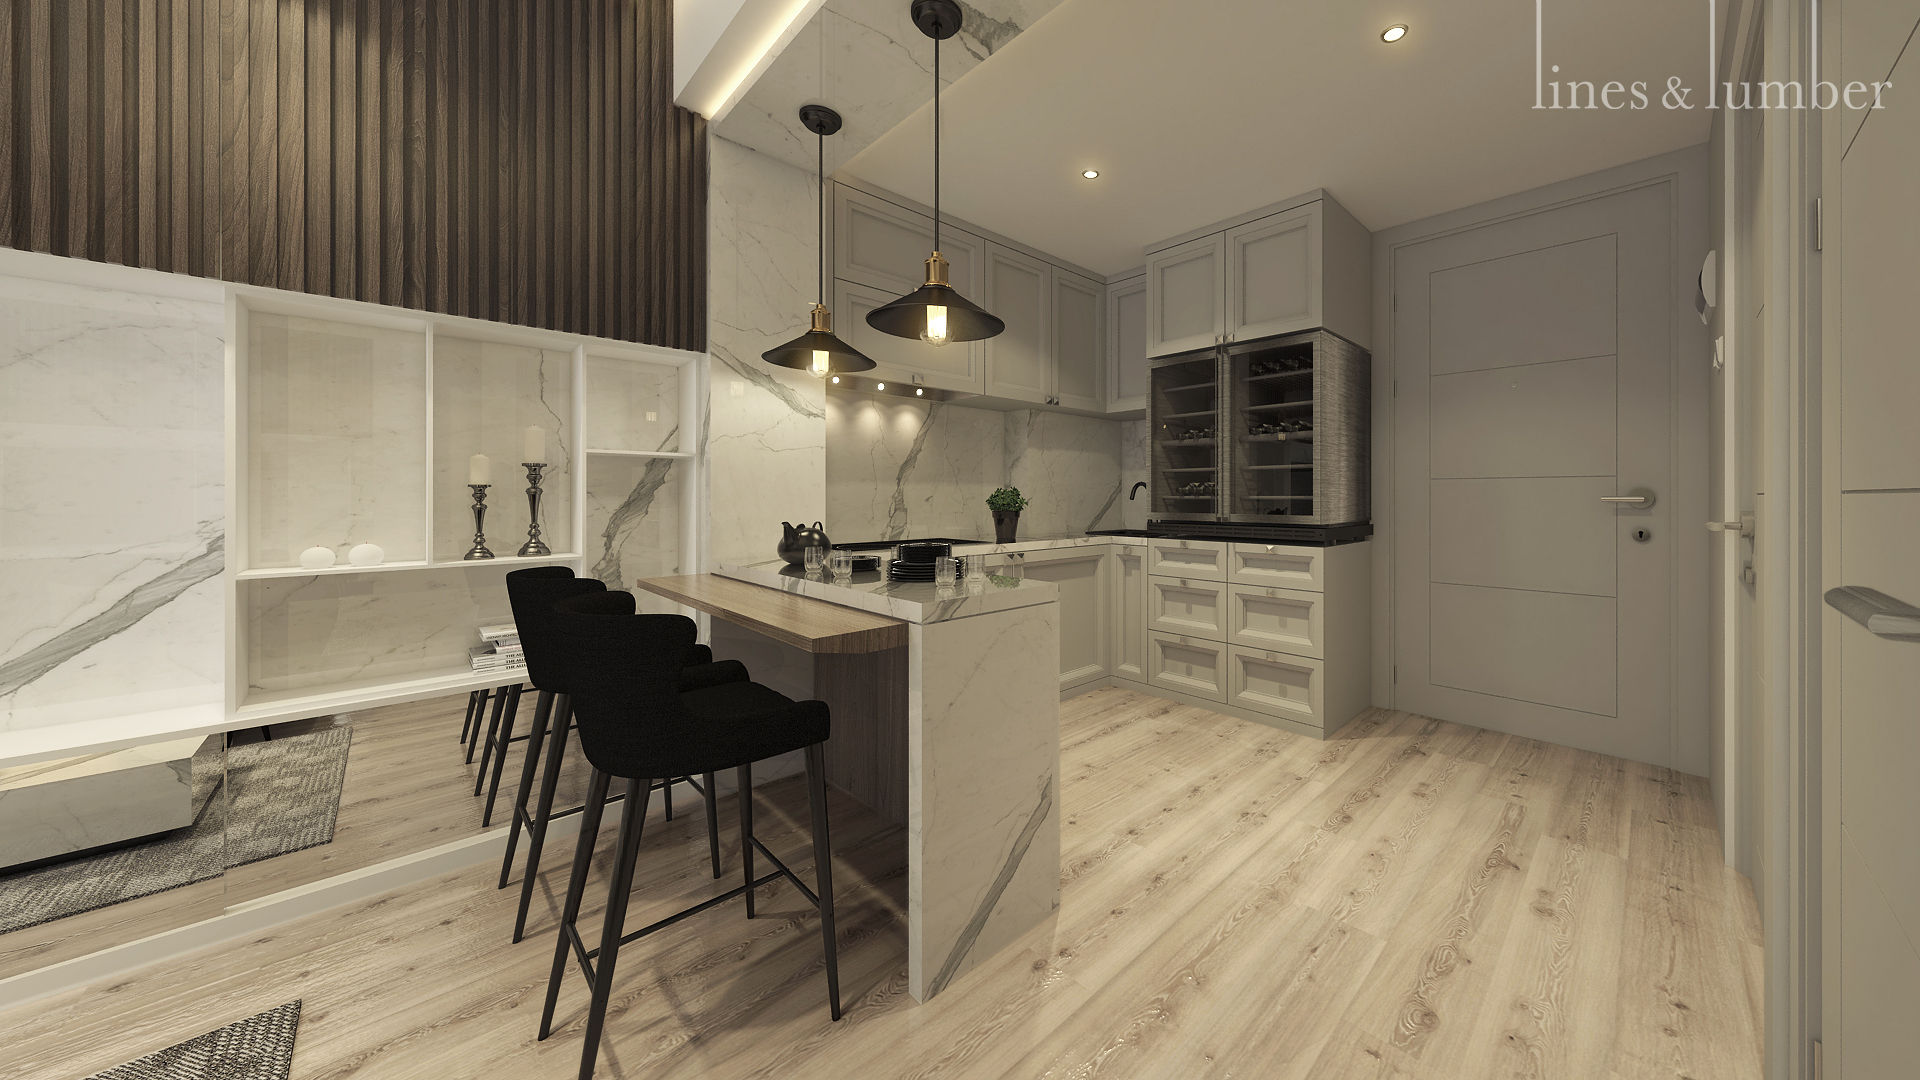 Studio Apartment, Sandalwood Springhill , Lines & Lumber Lines & Lumber Kitchen